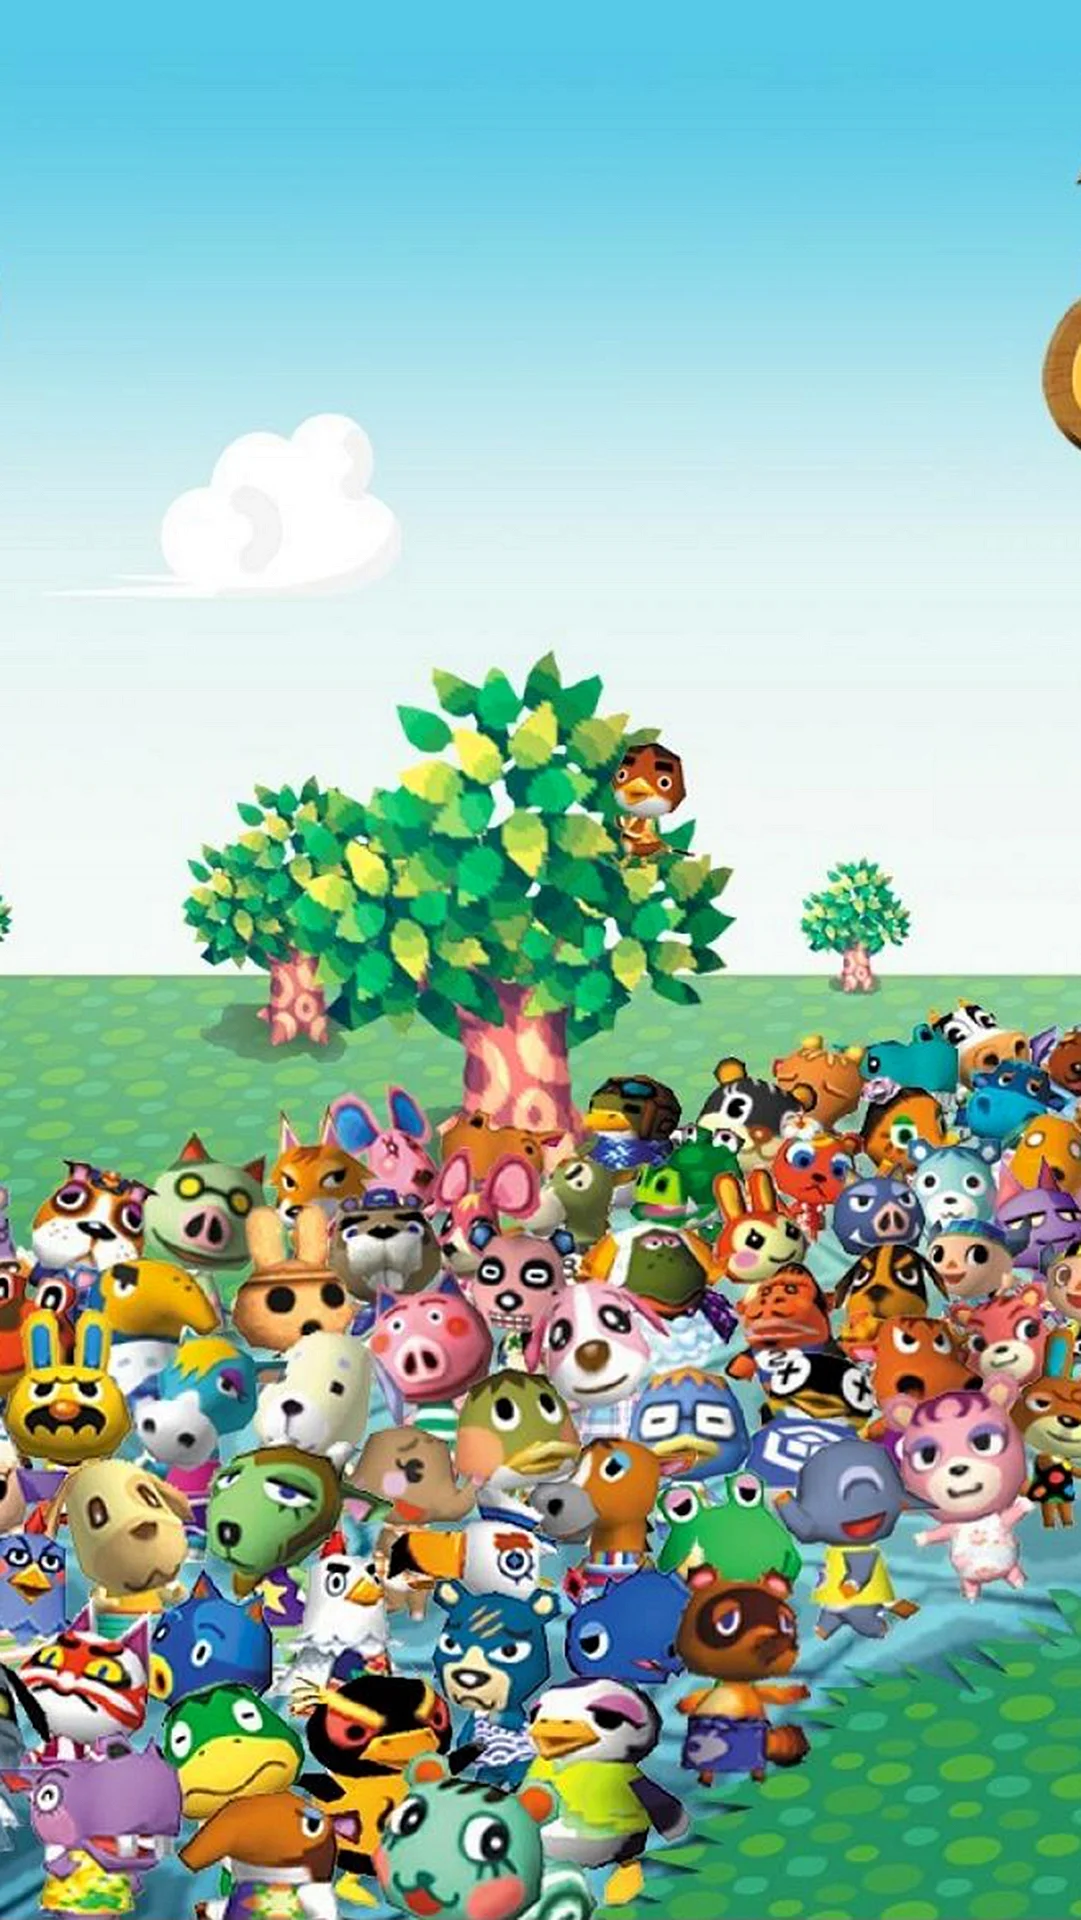 Nintendo Animal Crossing Wallpaper For iPhone